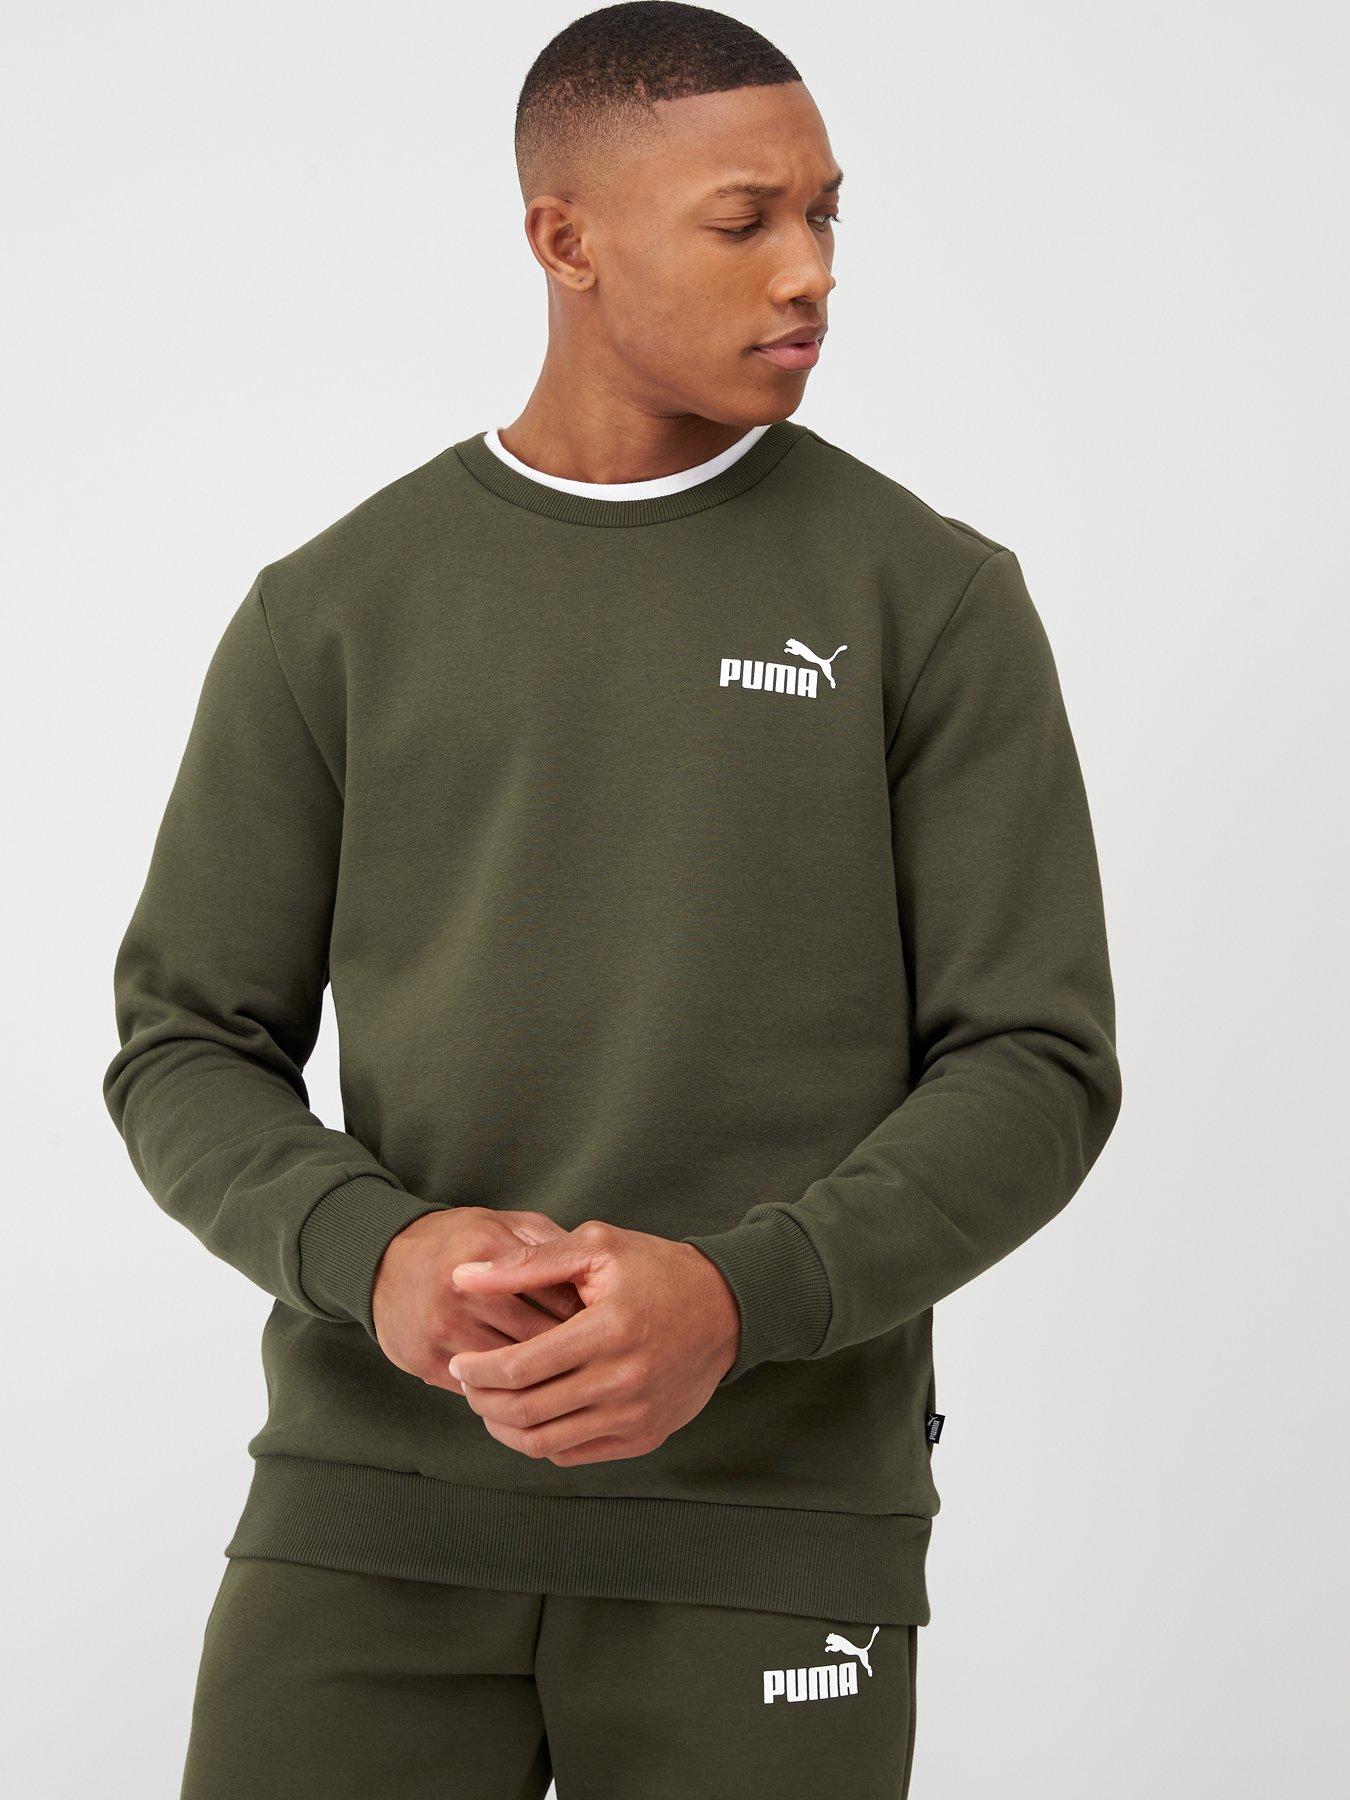 Puma Crew Sweatshirt - Khaki | very.co.uk